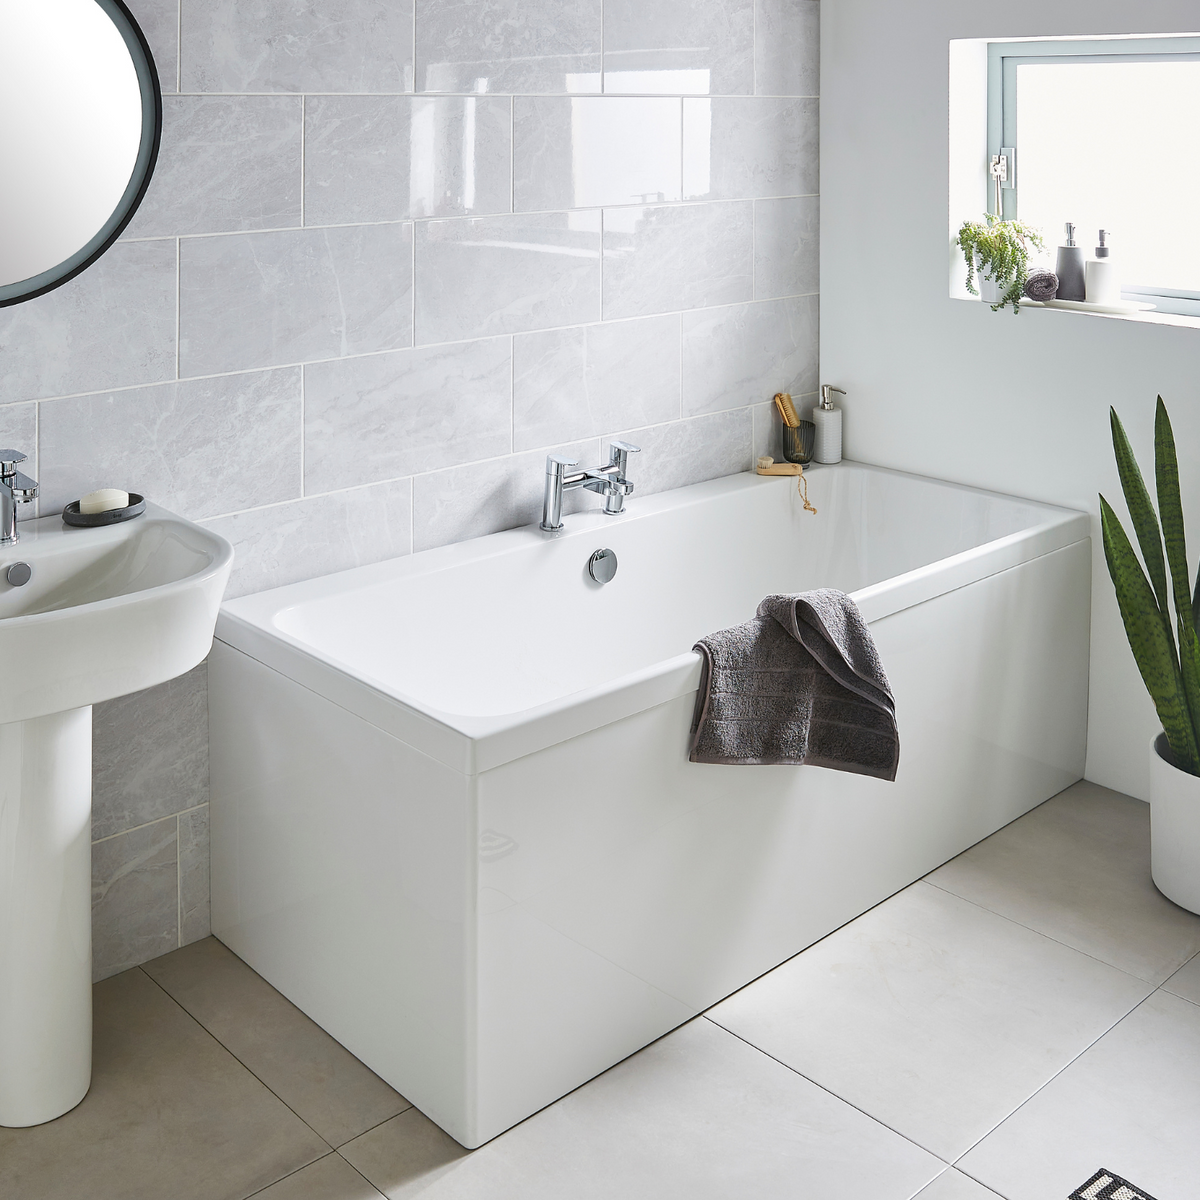 Kartell UK Eklipse Square Bathroom Suite with Refine Bath